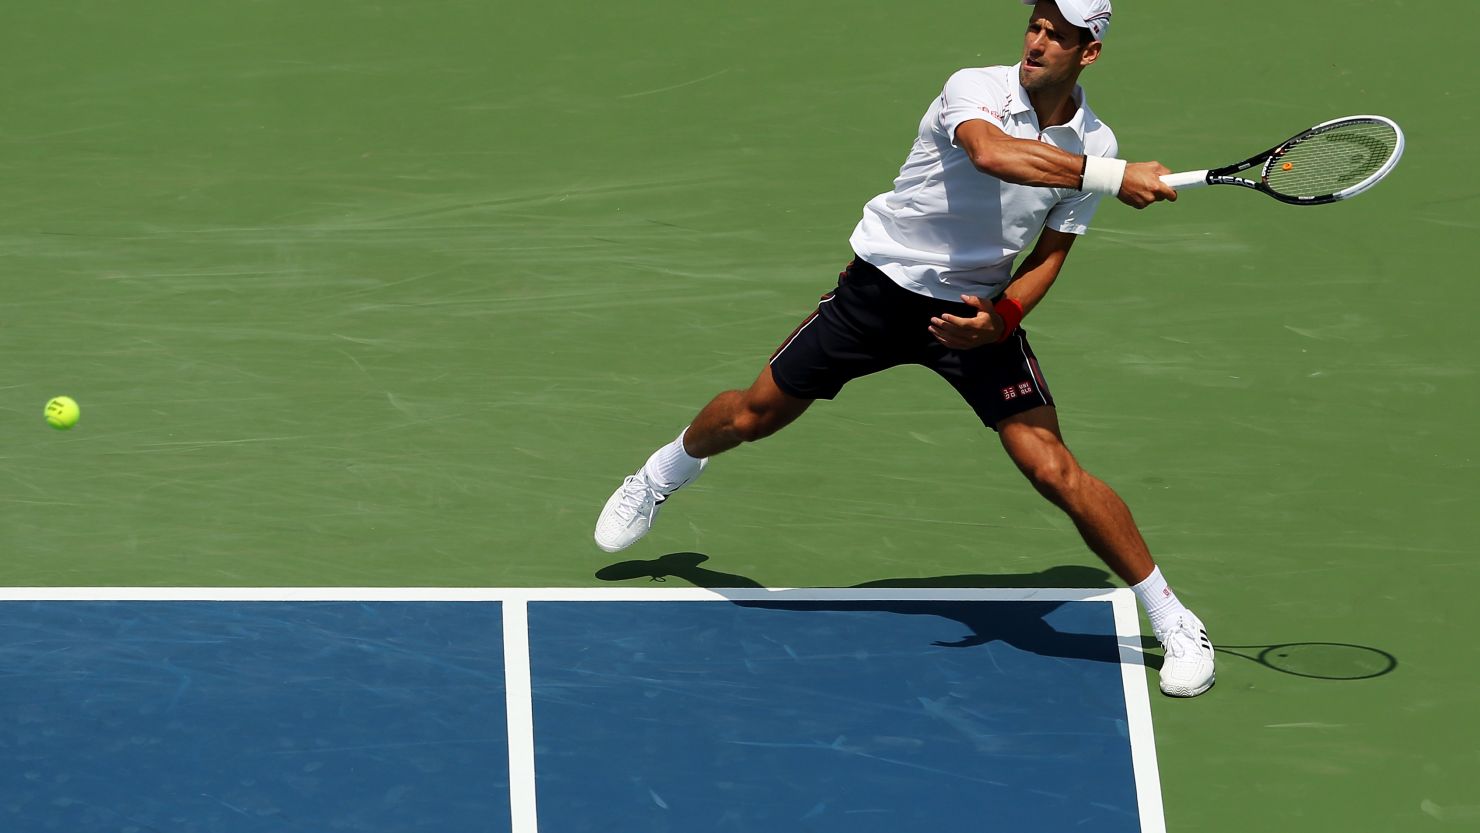 Novak Djokovic will play Argentina's Juan Martin Del Potro in the semifinals of the Cincinnati Masters on Saturday 